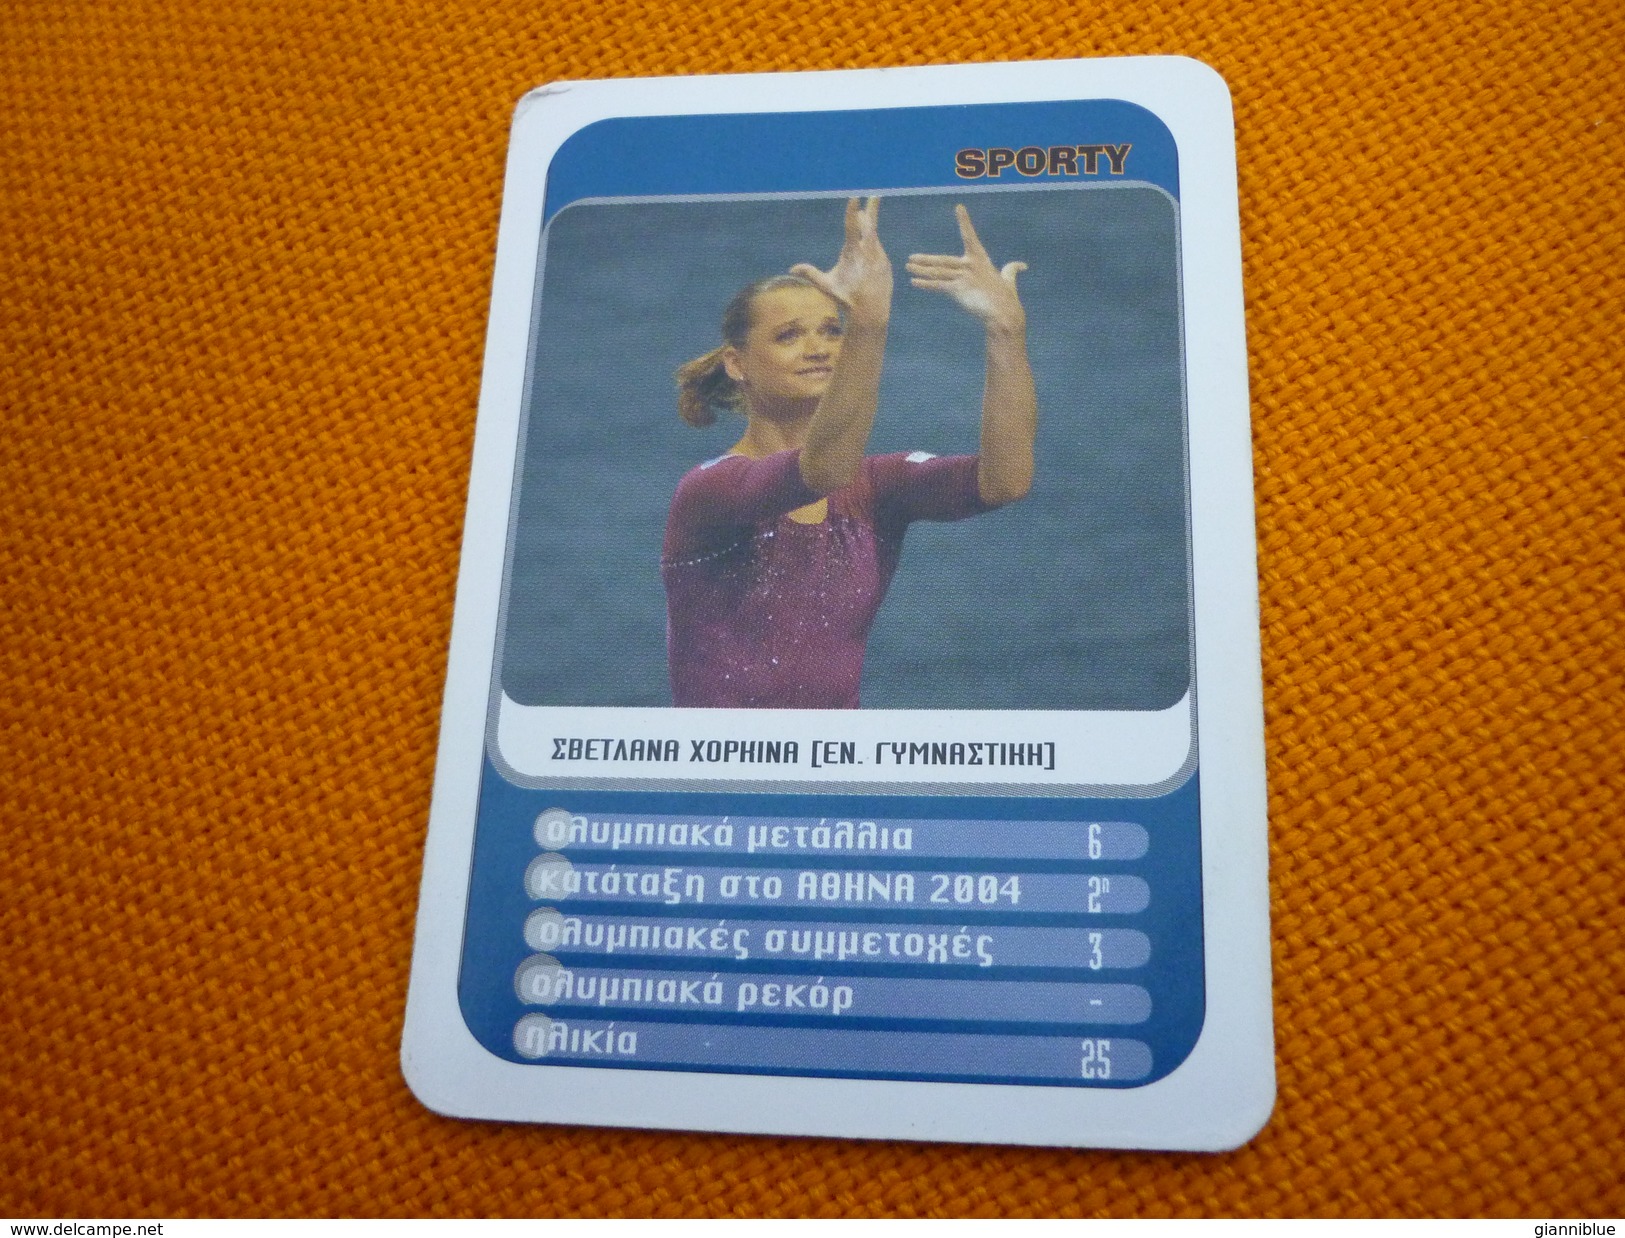 Svetlana Khorkina Russian Artistic Gymnastics Athens 2004 Olympic Games Medalist Greece Greek Trading Card - Trading Cards